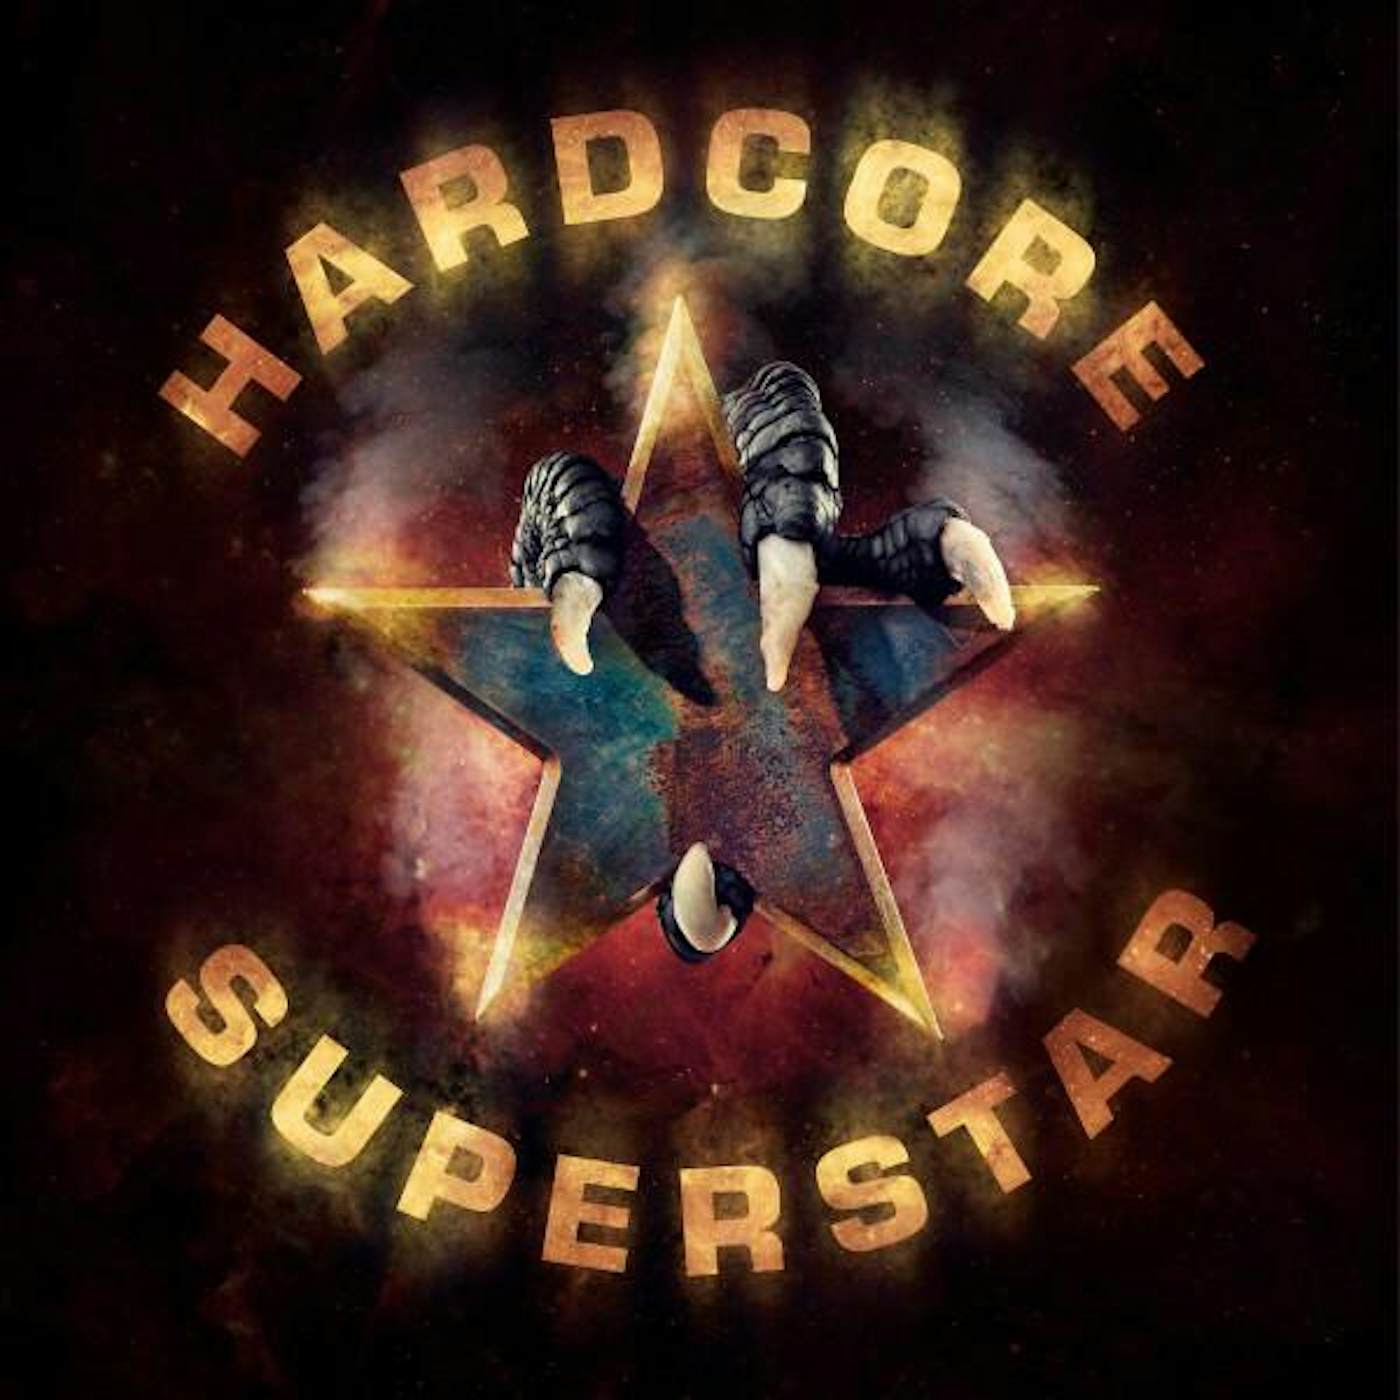 Hardcore Superstar Abrakadabra Vinyl Record